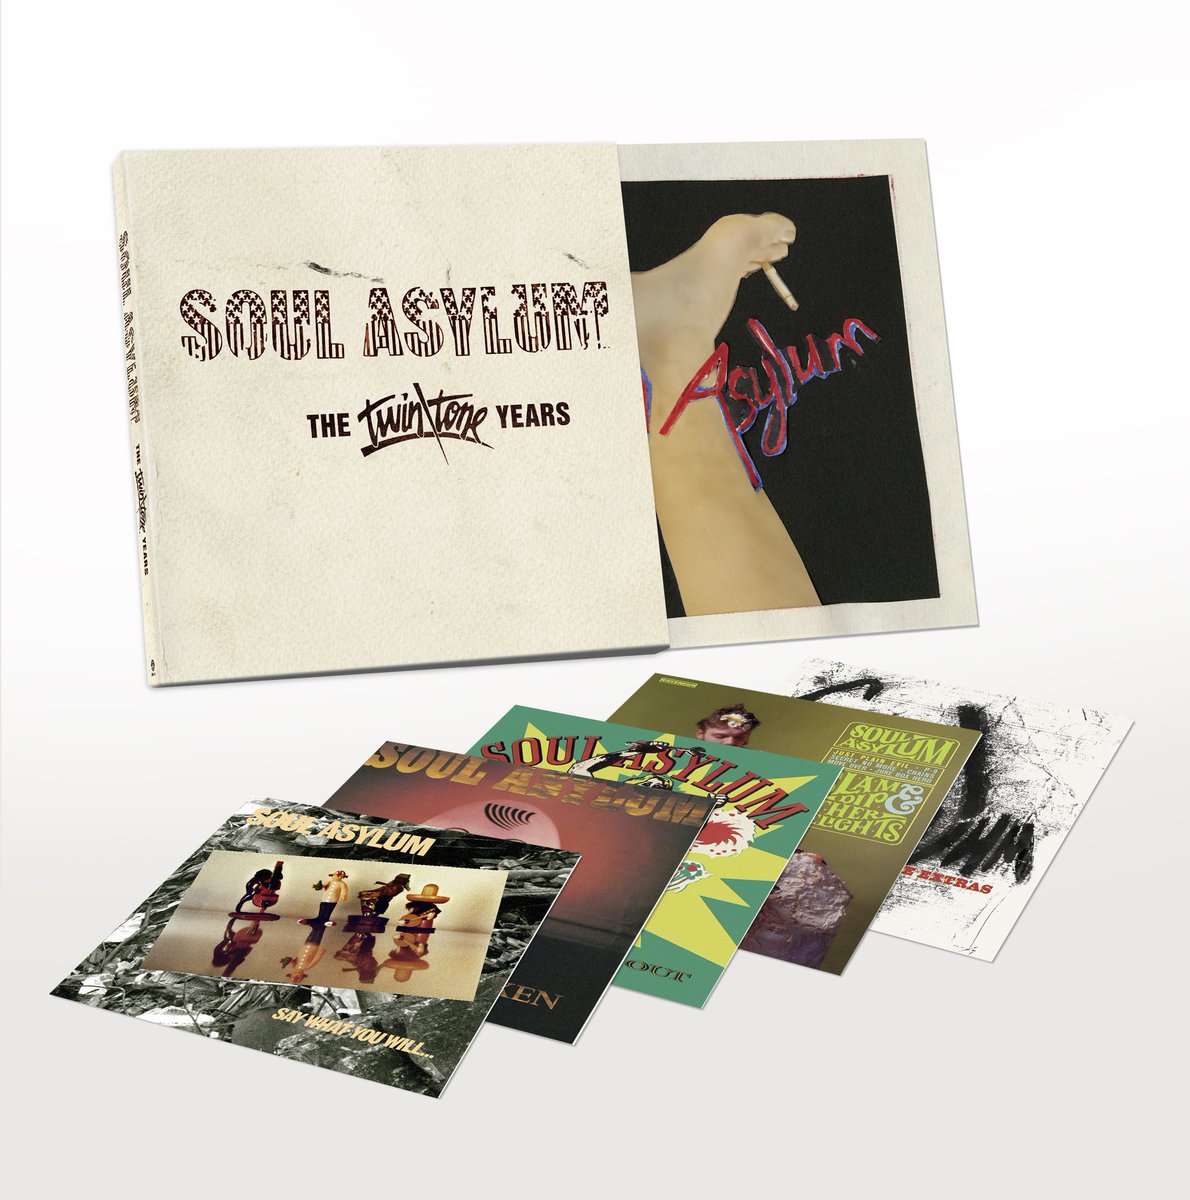 Soul Asylum - The Twin Tone Years (boxset)